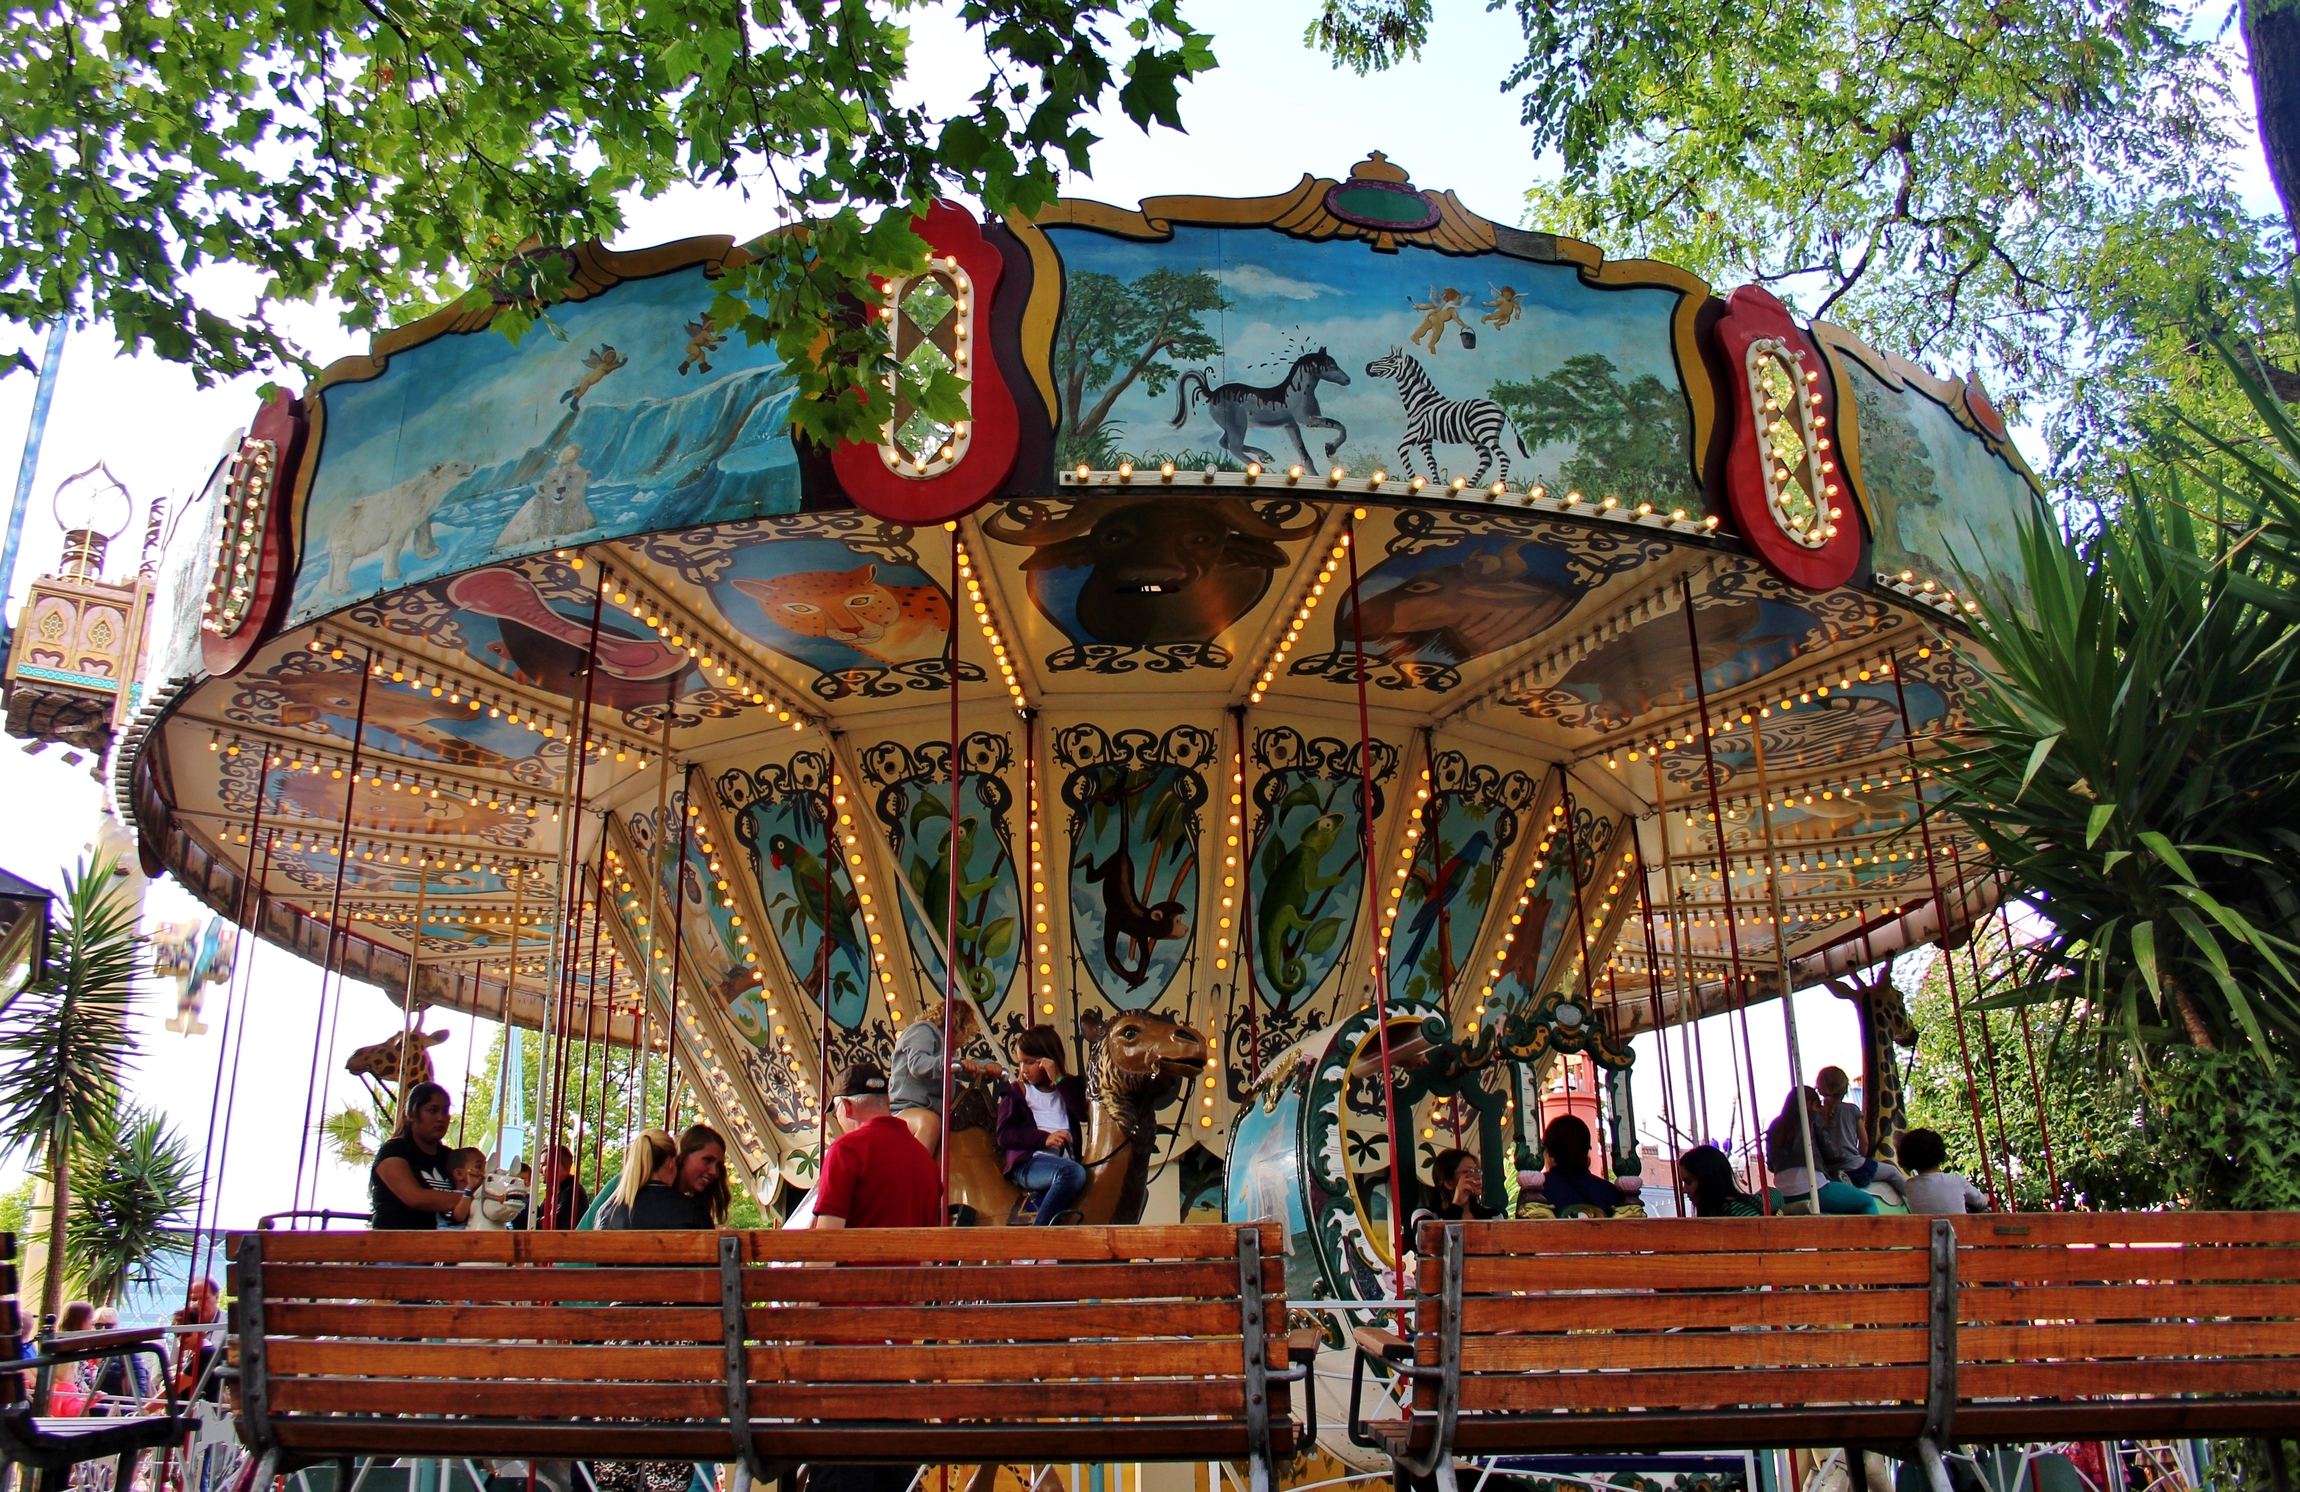 The Carousel at Tivoli amusement park